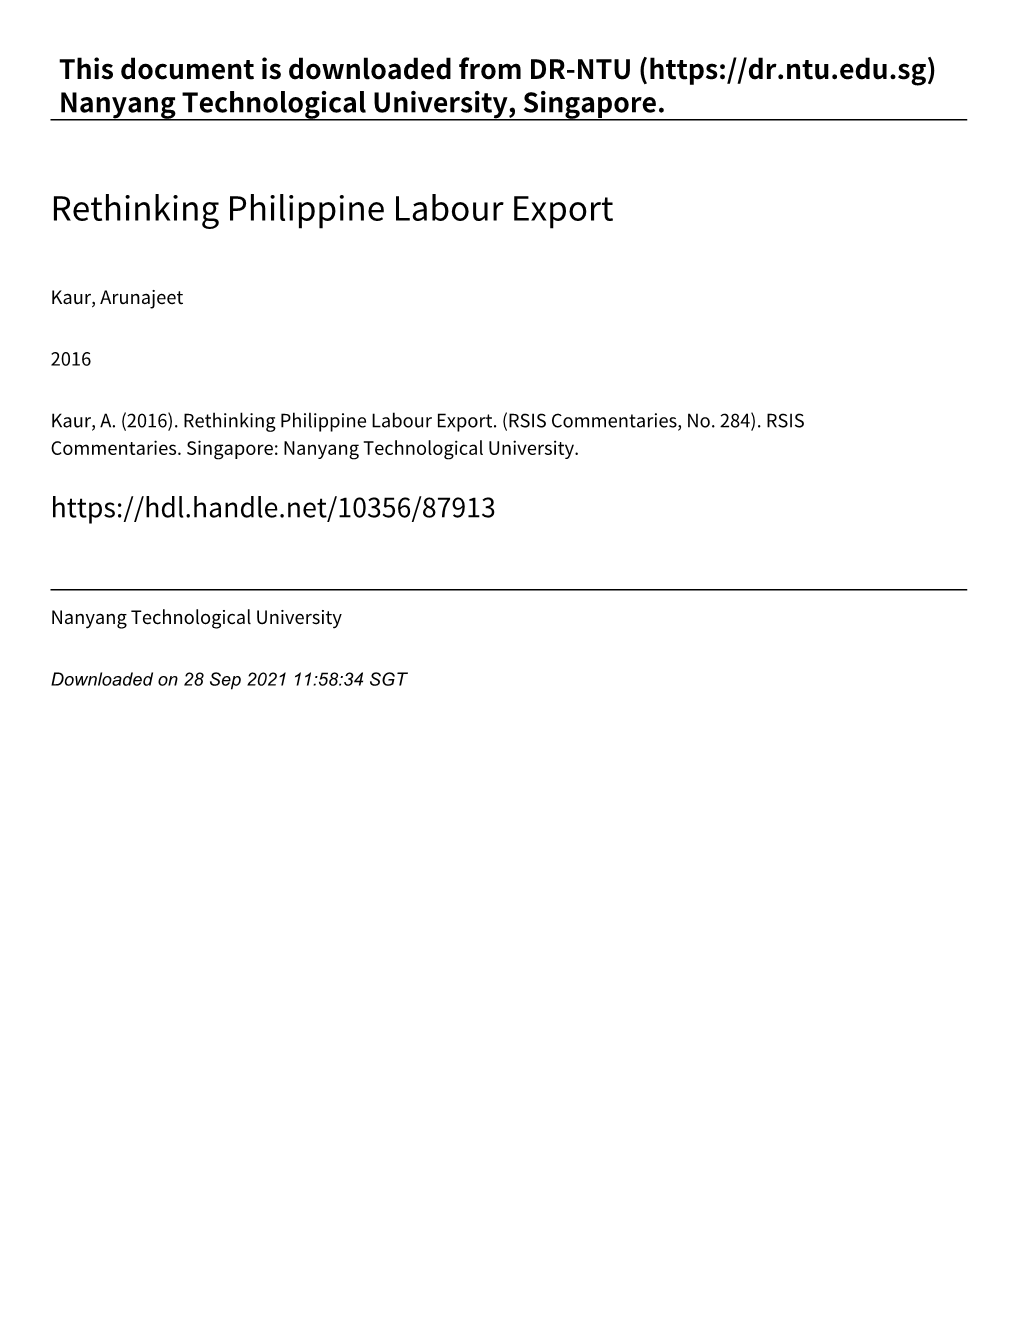 Rethinking Philippine Labour Export